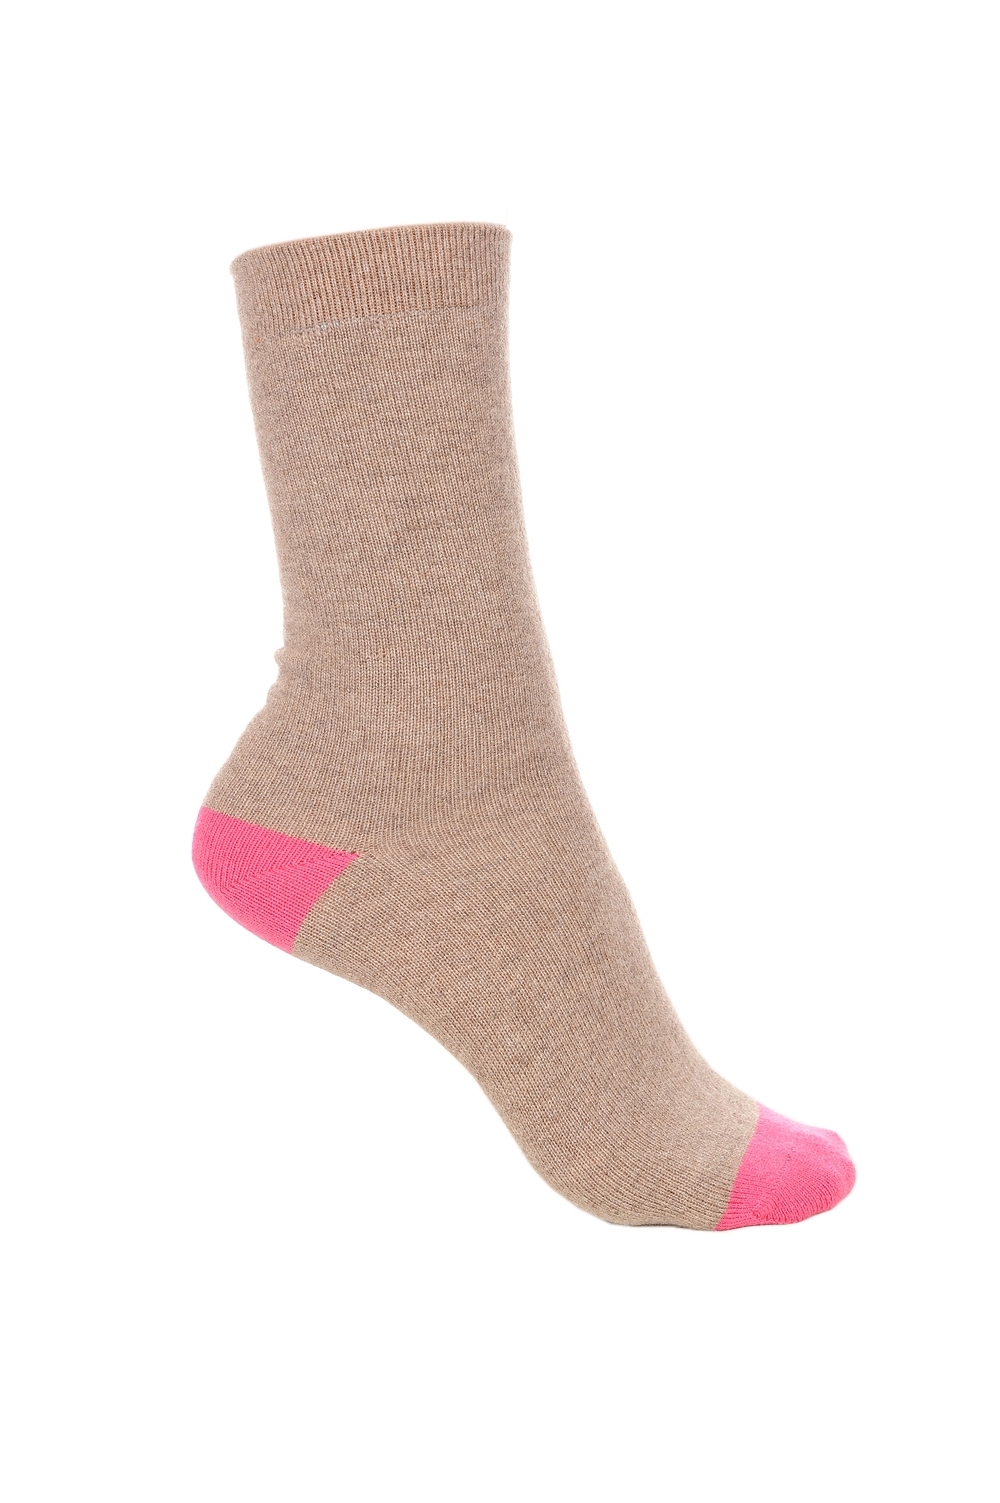 Cashmere & Elastane accessories socks frontibus natural brown shocking pink 9 11